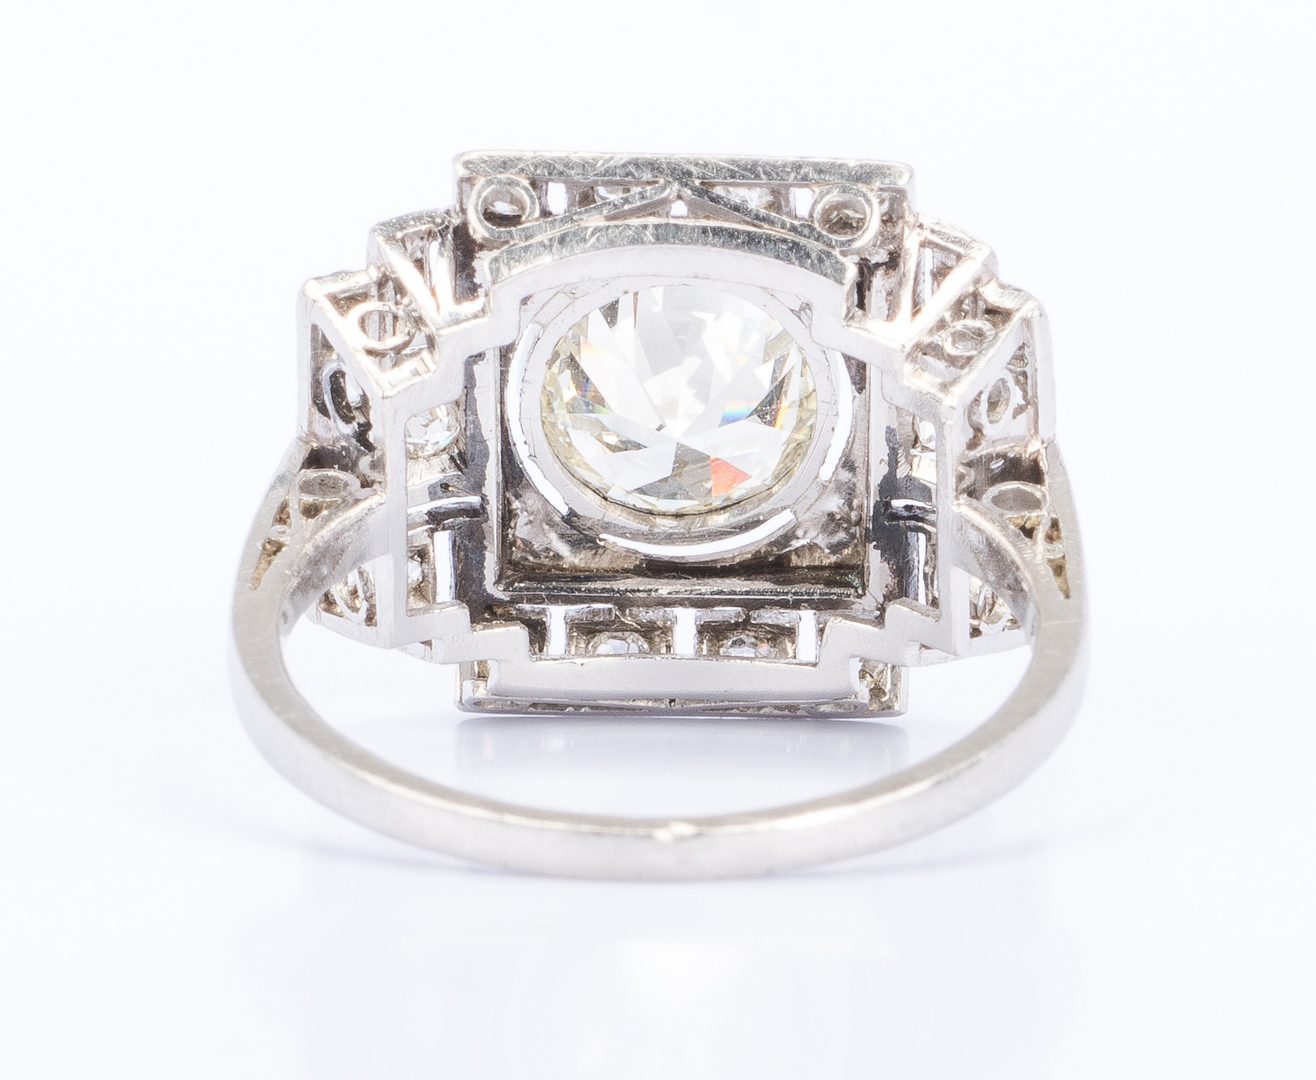 Lot 26: Art Deco Plat Diamond Ring, 1.42 ctw